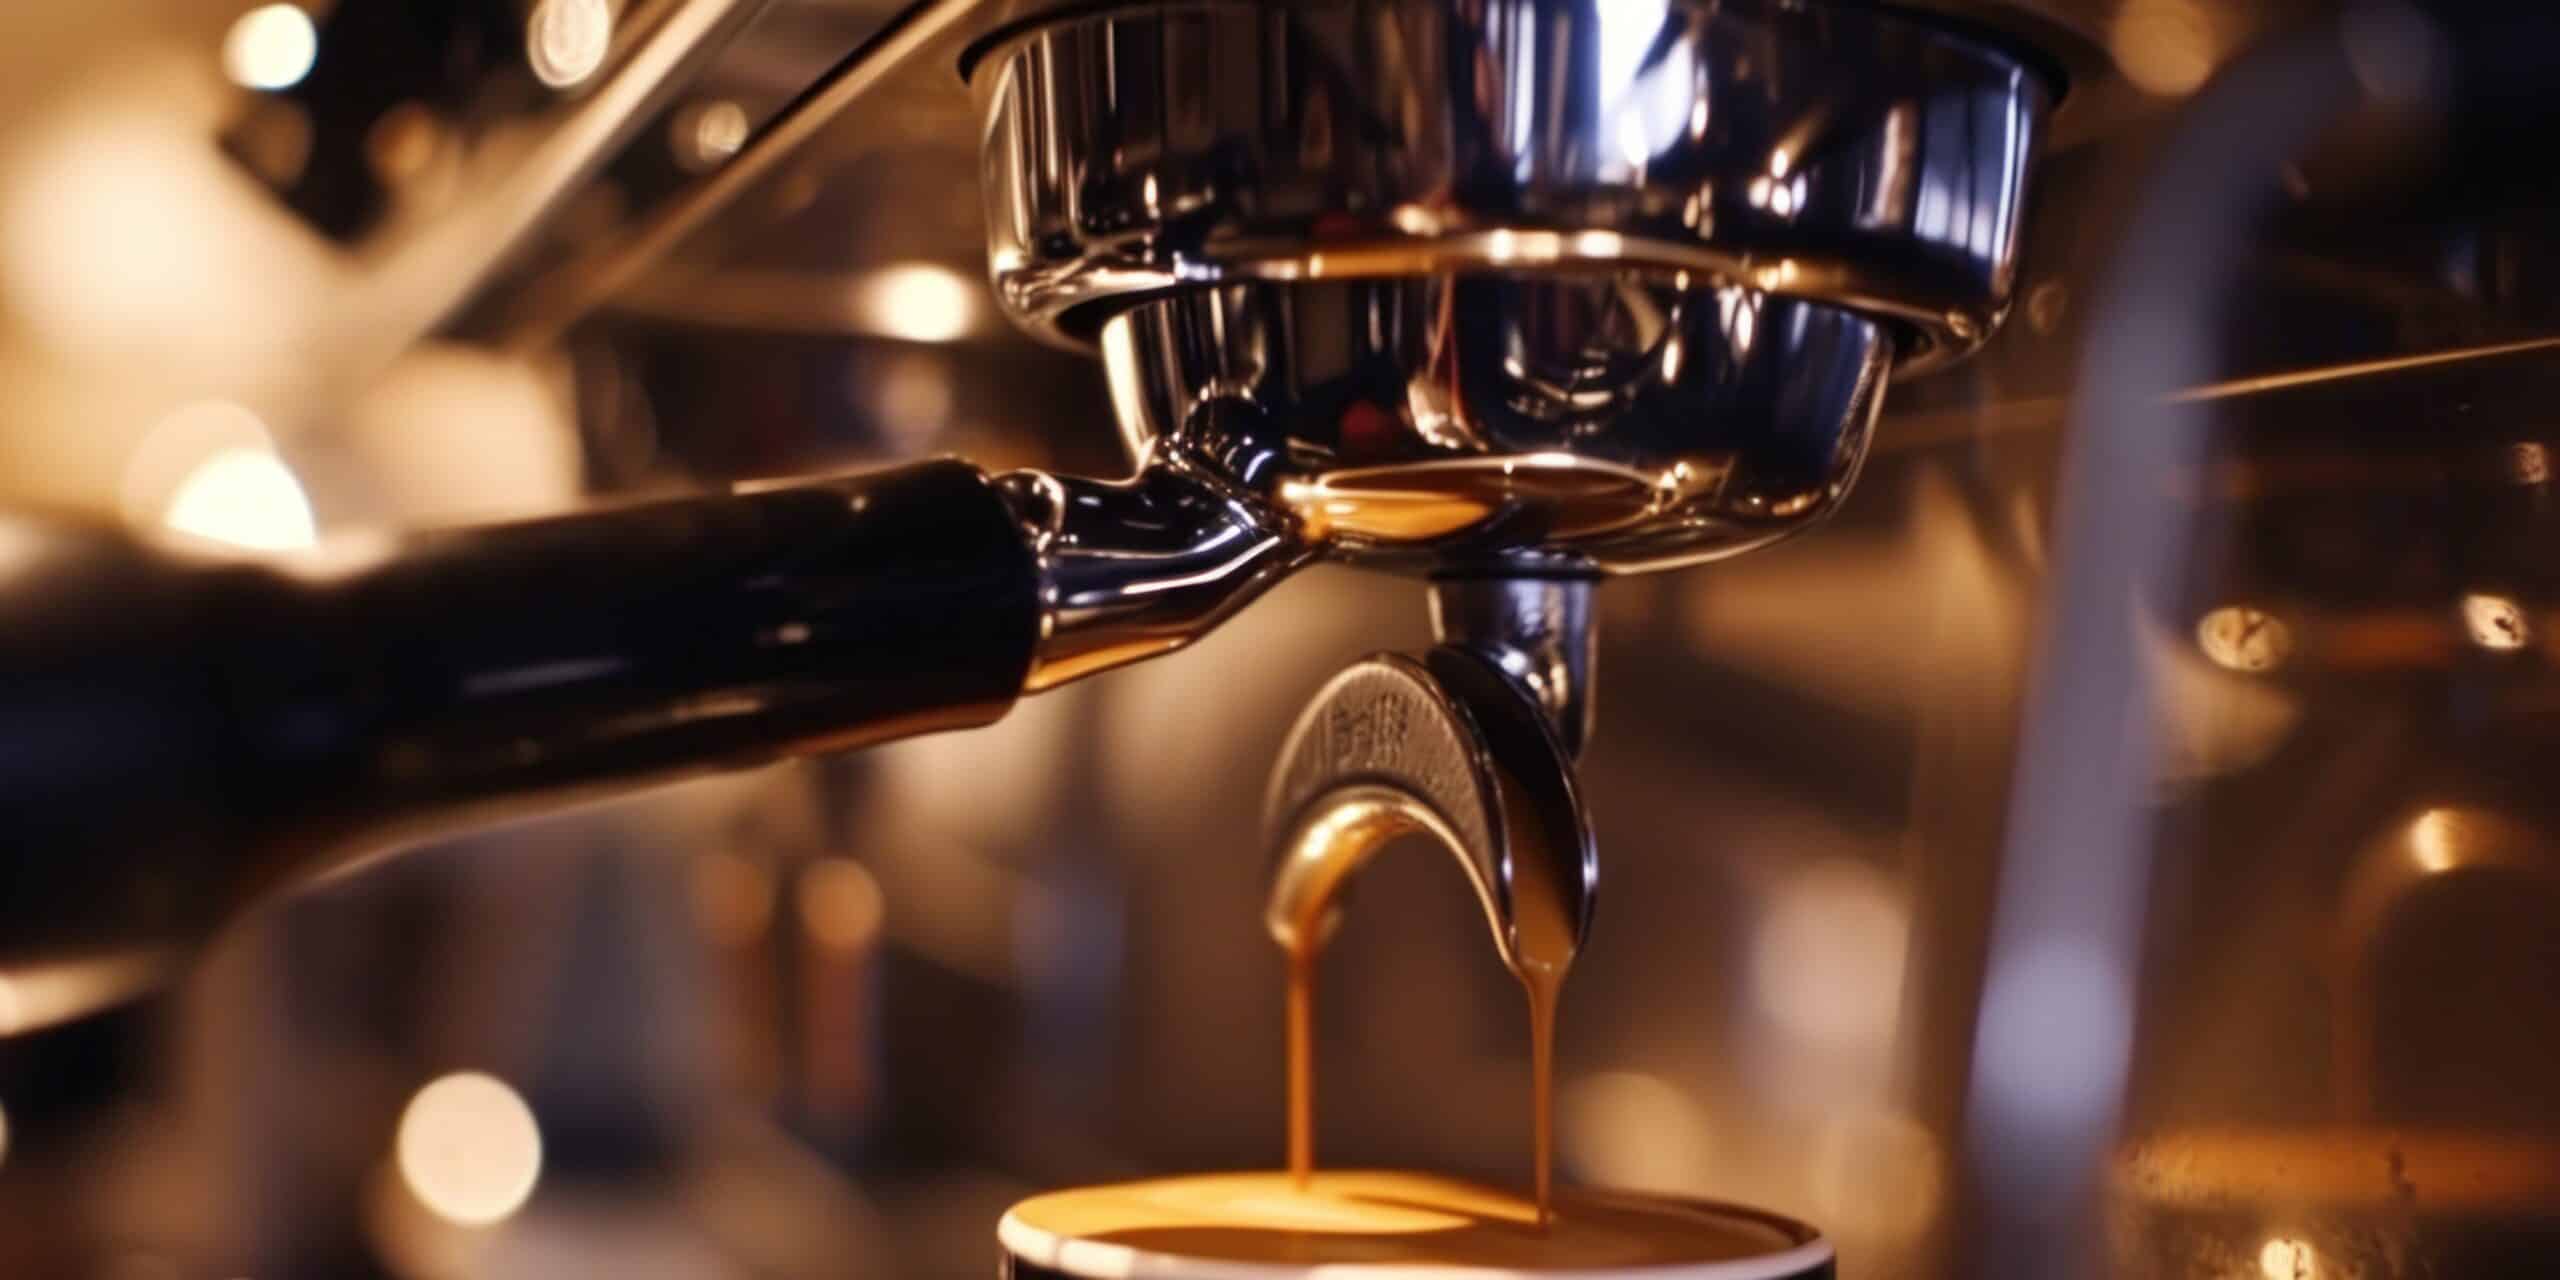 www.appr.com : How To Clean Espresso Machine?